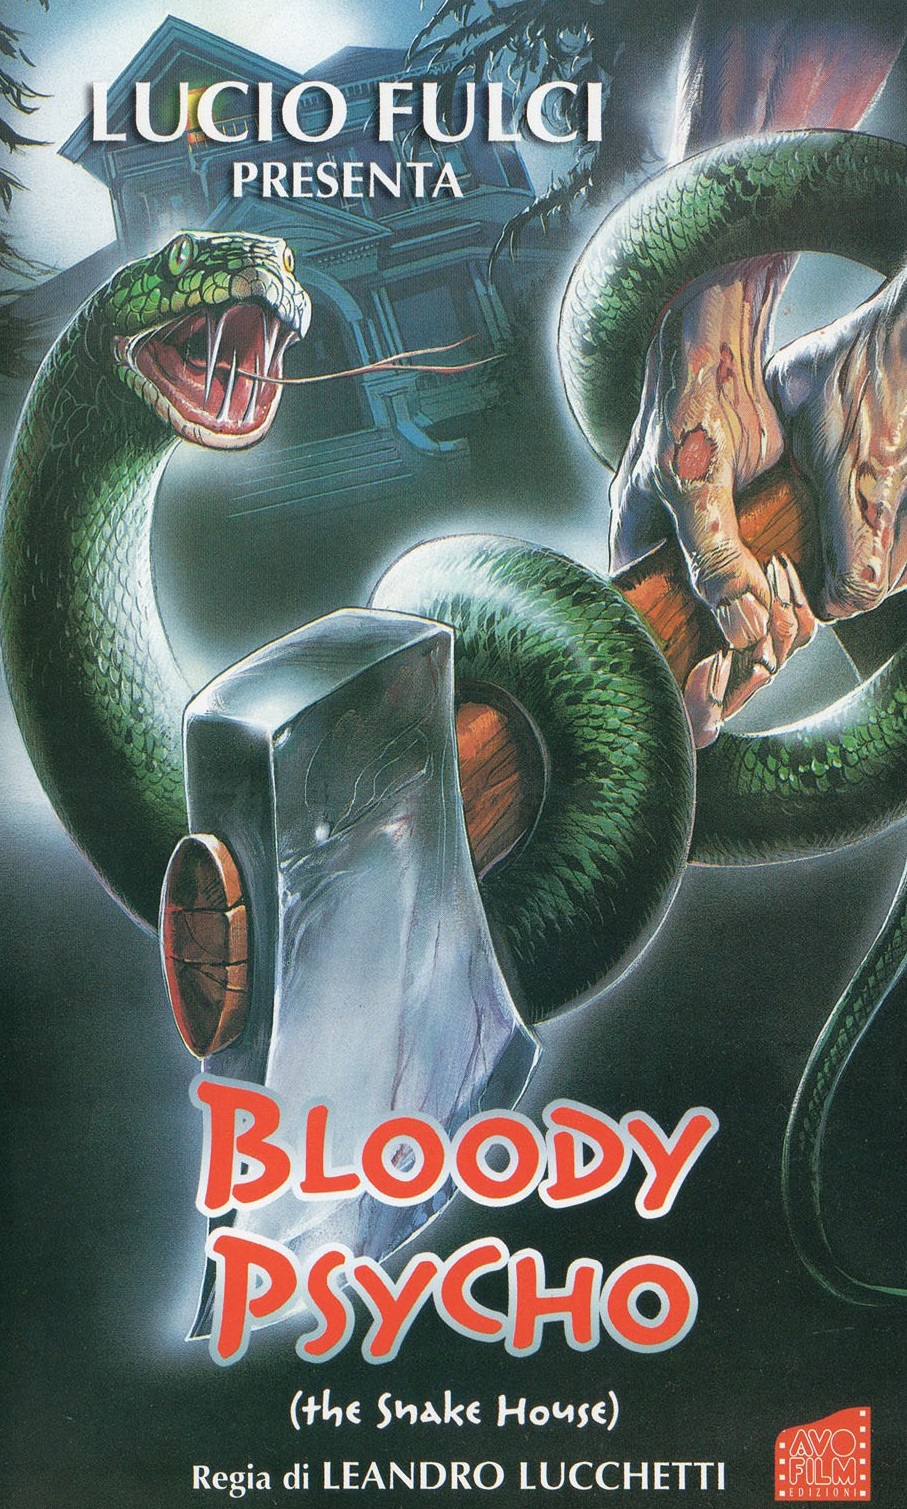 affiche du film Bloody psycho